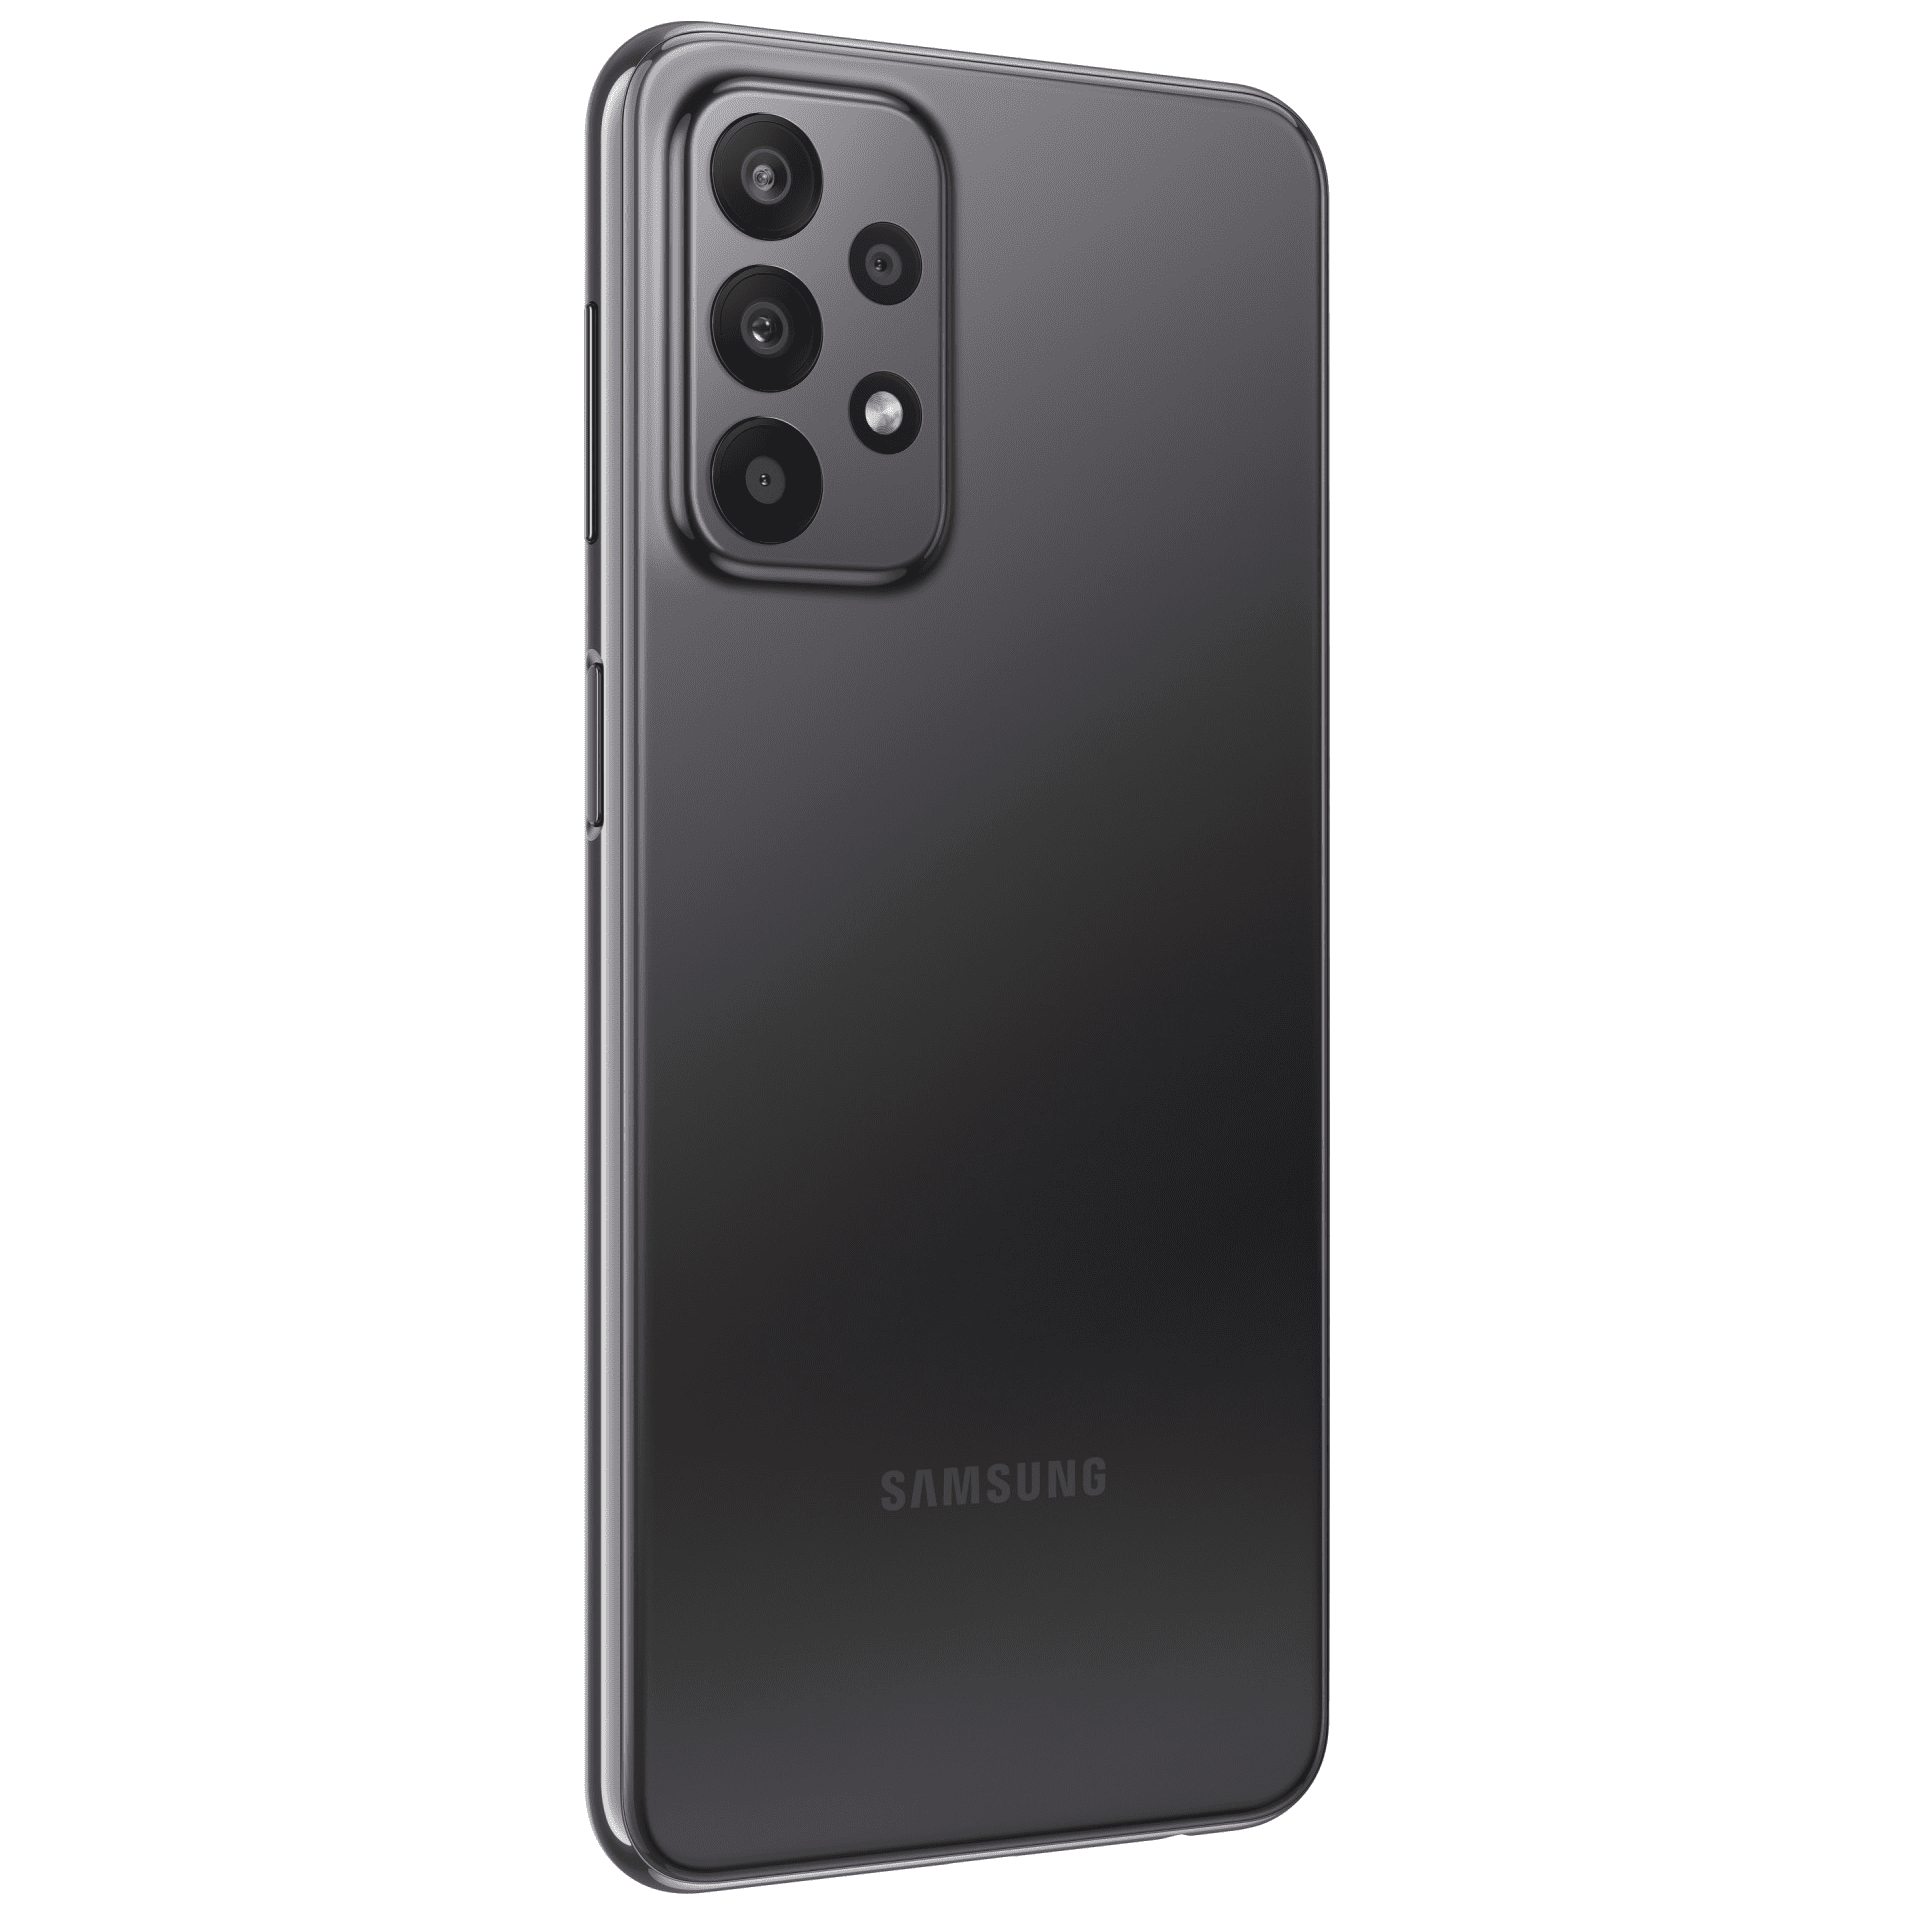  Samsung Galaxy A23 (SM-A235M/DS) Dual SIM,128 GB 4GB RAM,  Factory Unlocked GSM, International Version - No Warranty - (Black) : Cell  Phones & Accessories